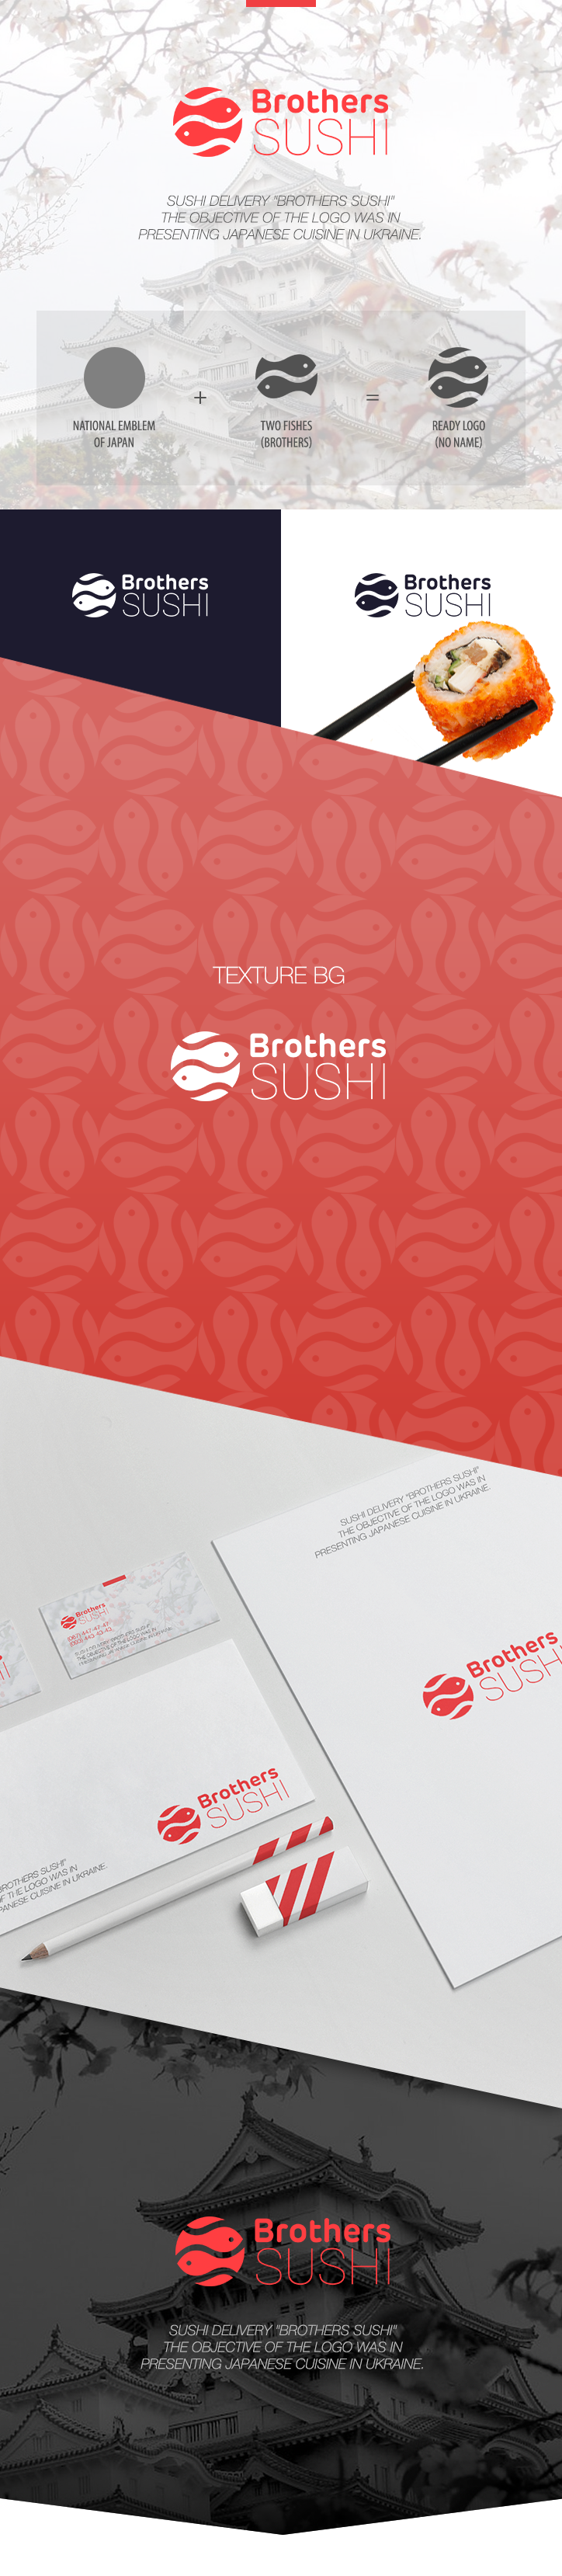 Sushi brothers design nicreative